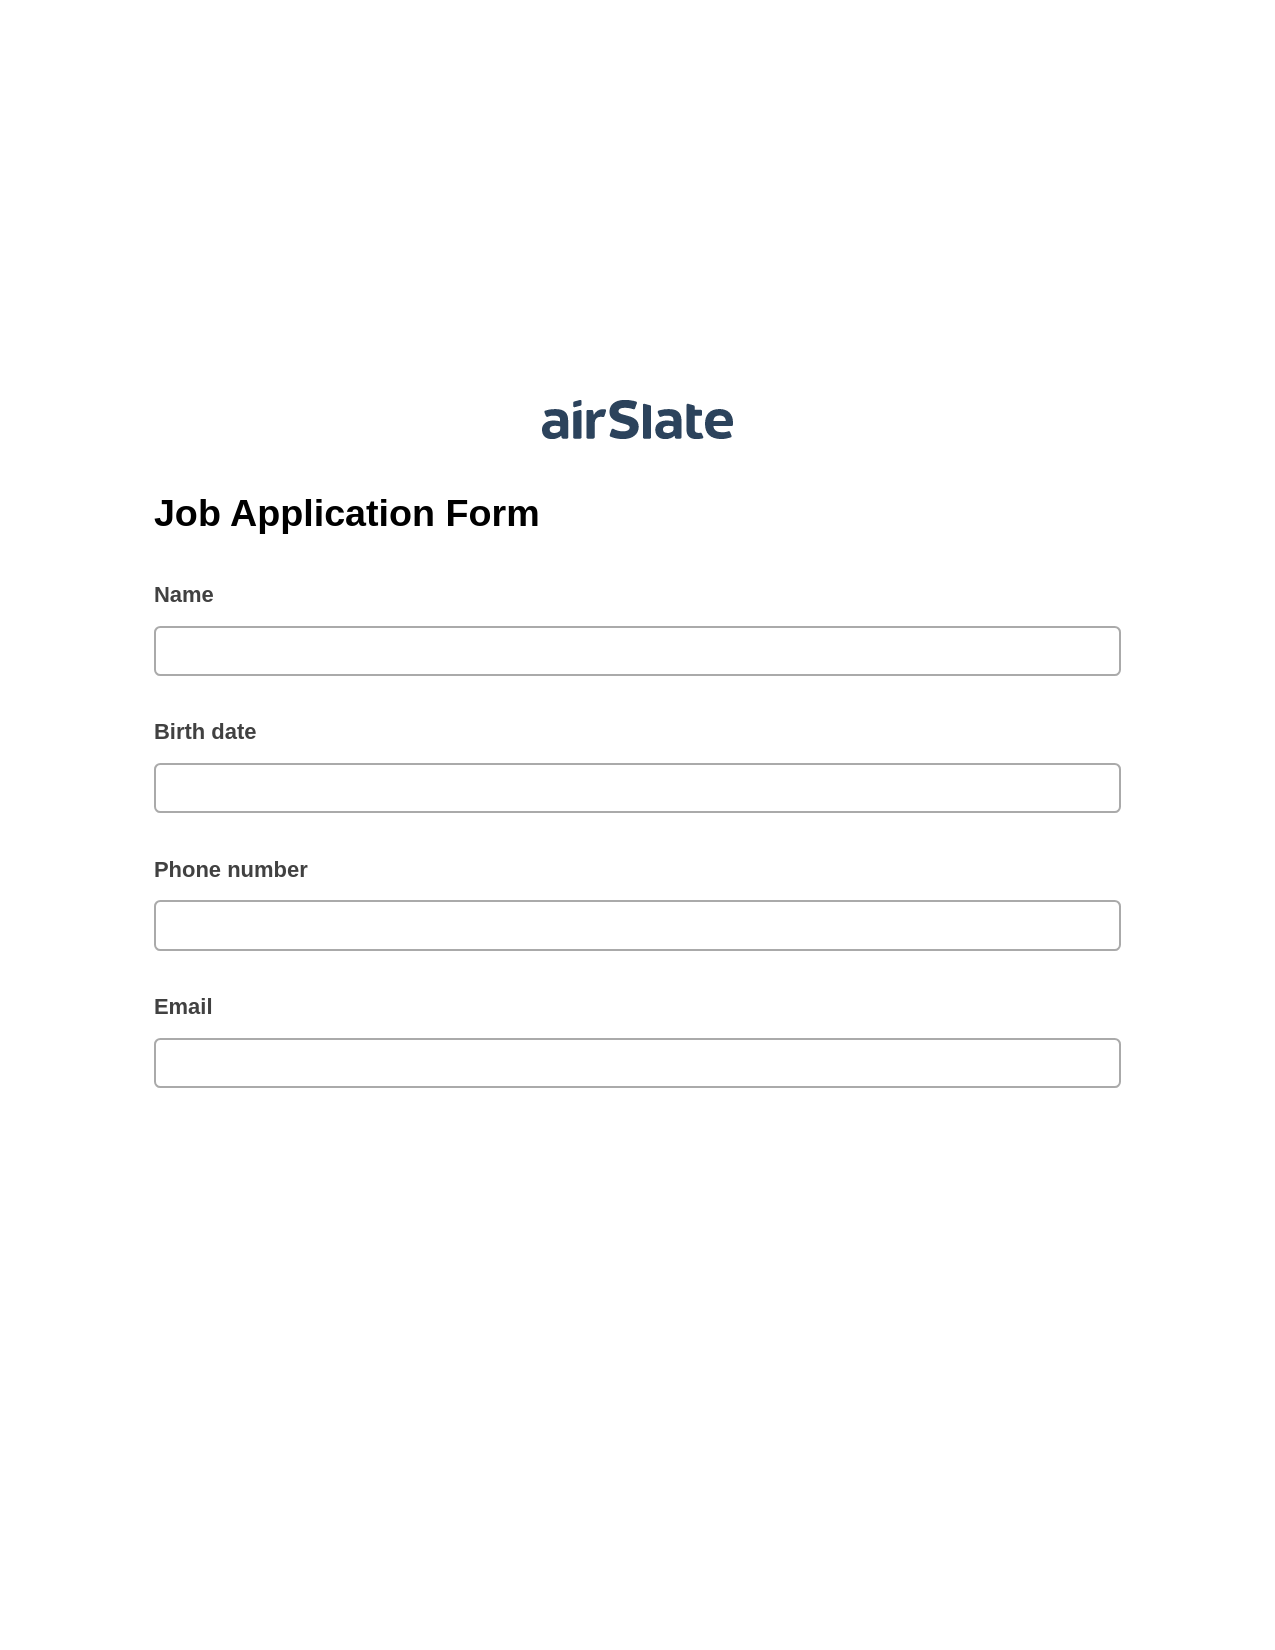 Job Application Form Pre-fill Slate from MS Dynamics 365 Records Bot, Create slate bot, Google Drive Bot